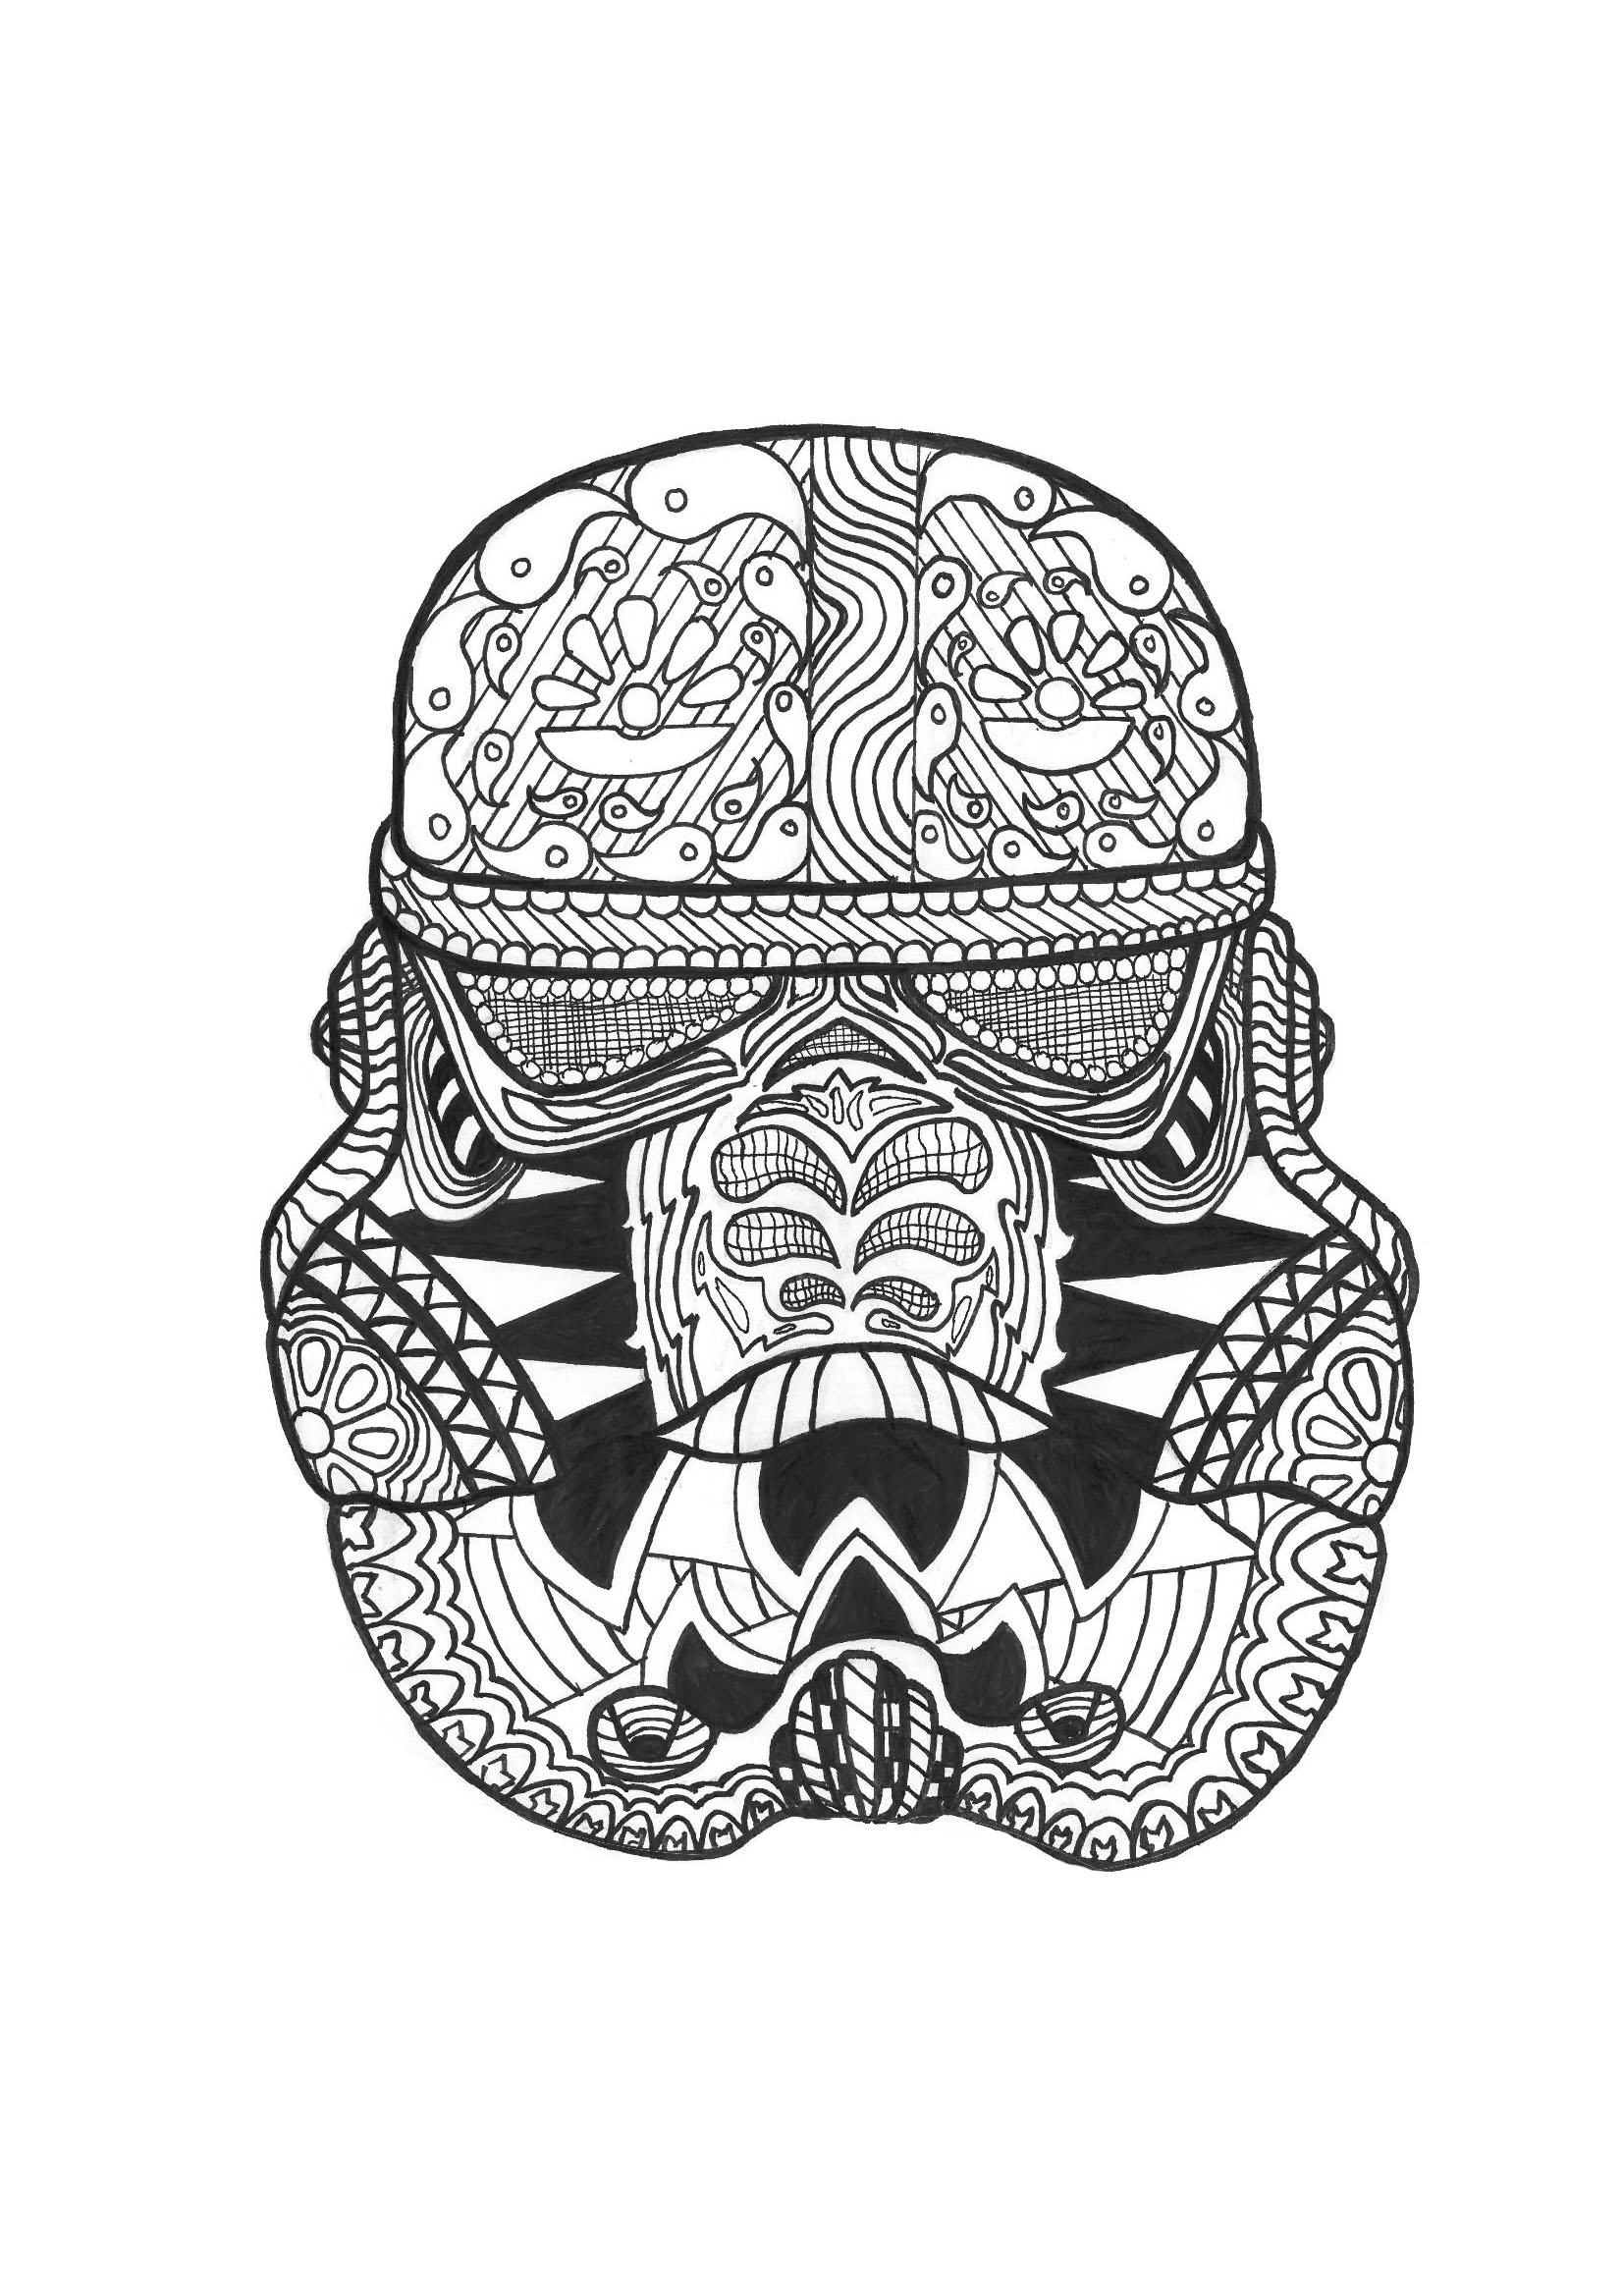 Página para colorir de um capacete de Stormtrooper (da Guerra das Estrelas)